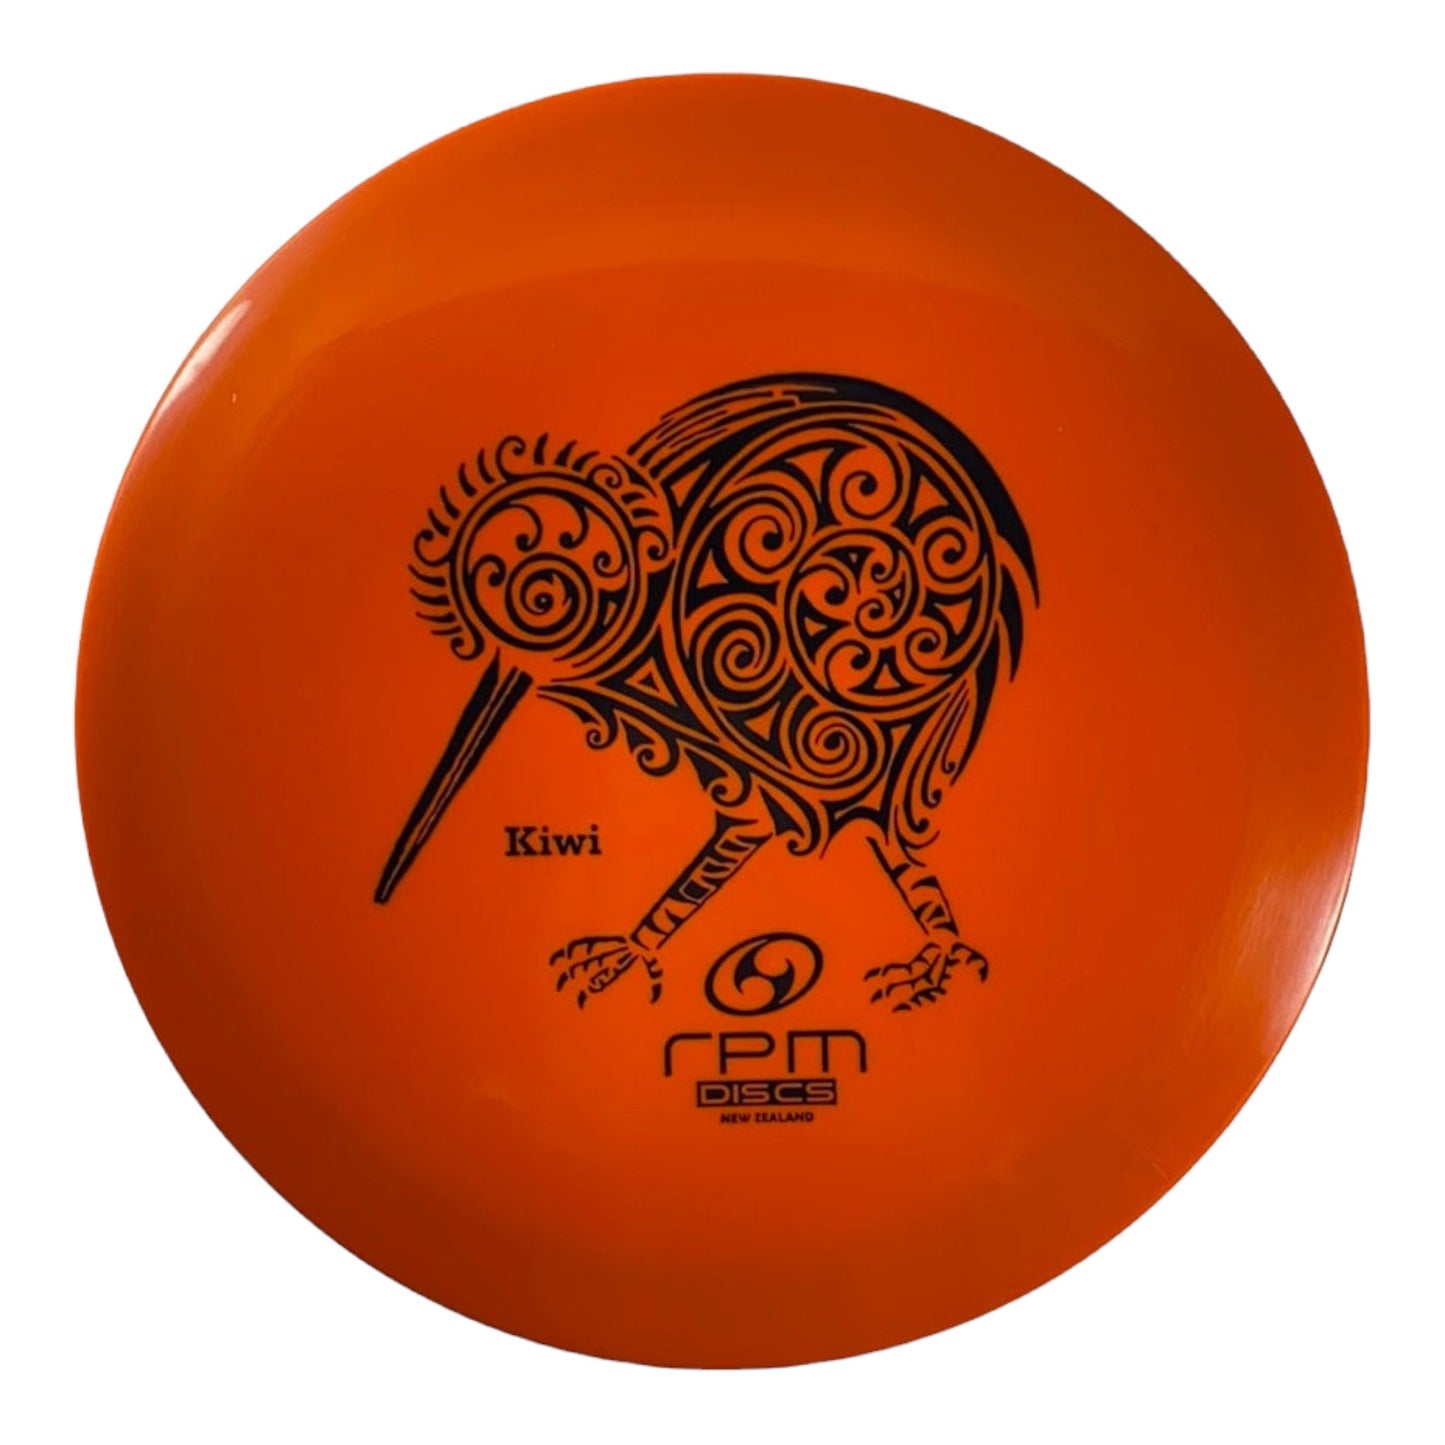 RPM Discs Kiwi | Atomic | Orange/Black 174g Disc Golf